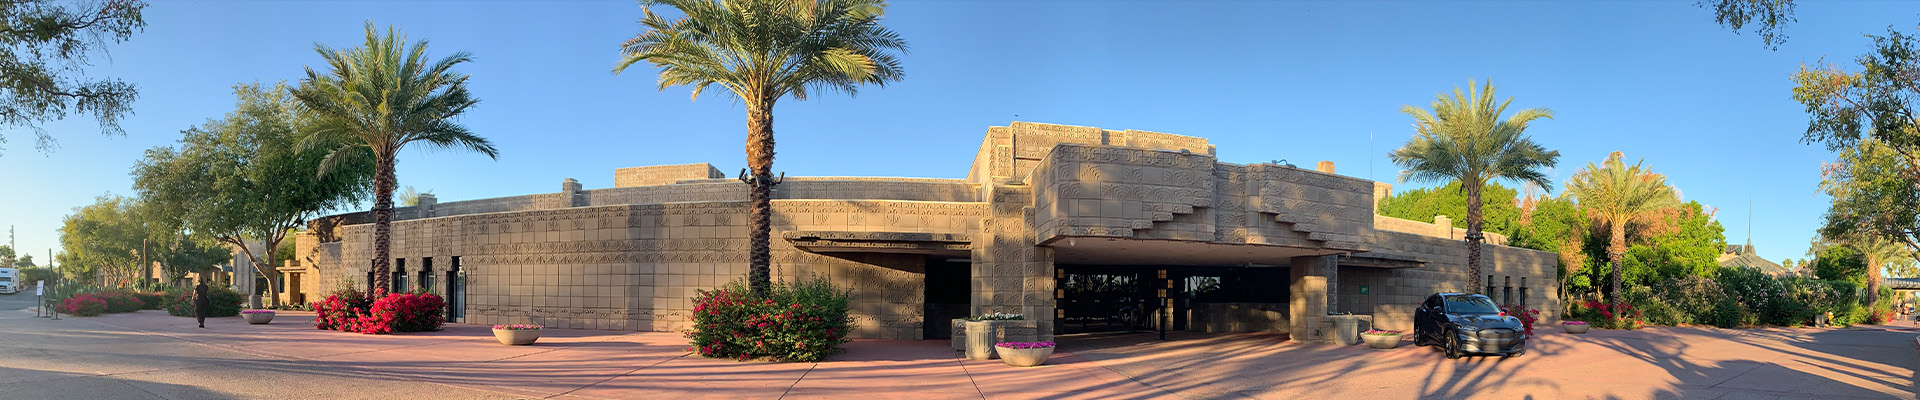 Photo of the exterior of the Arizona Biltmore Hotel.